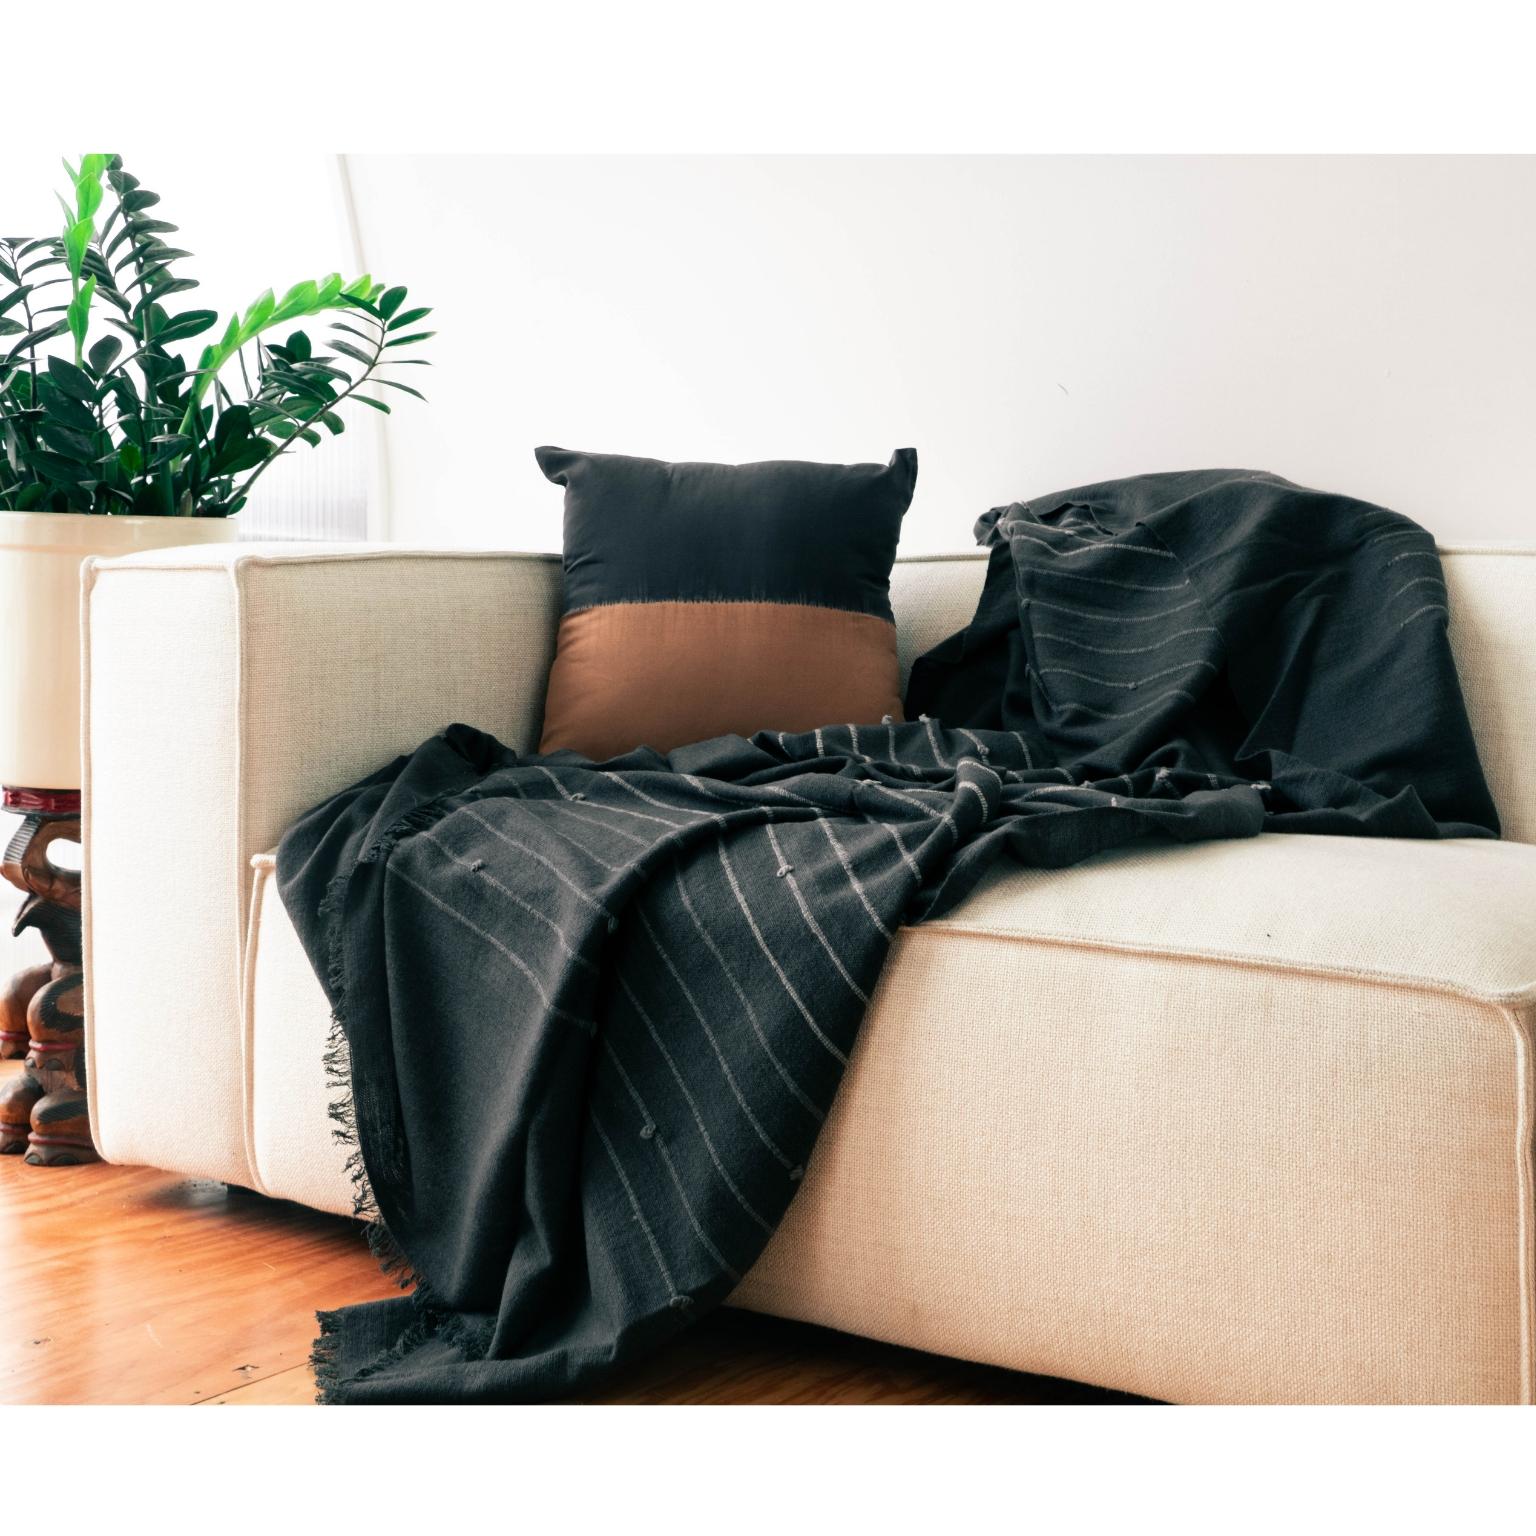  Alei Handloom Throw / Blanket In Charcoal Black , Stripes Pattern  For Sale 3